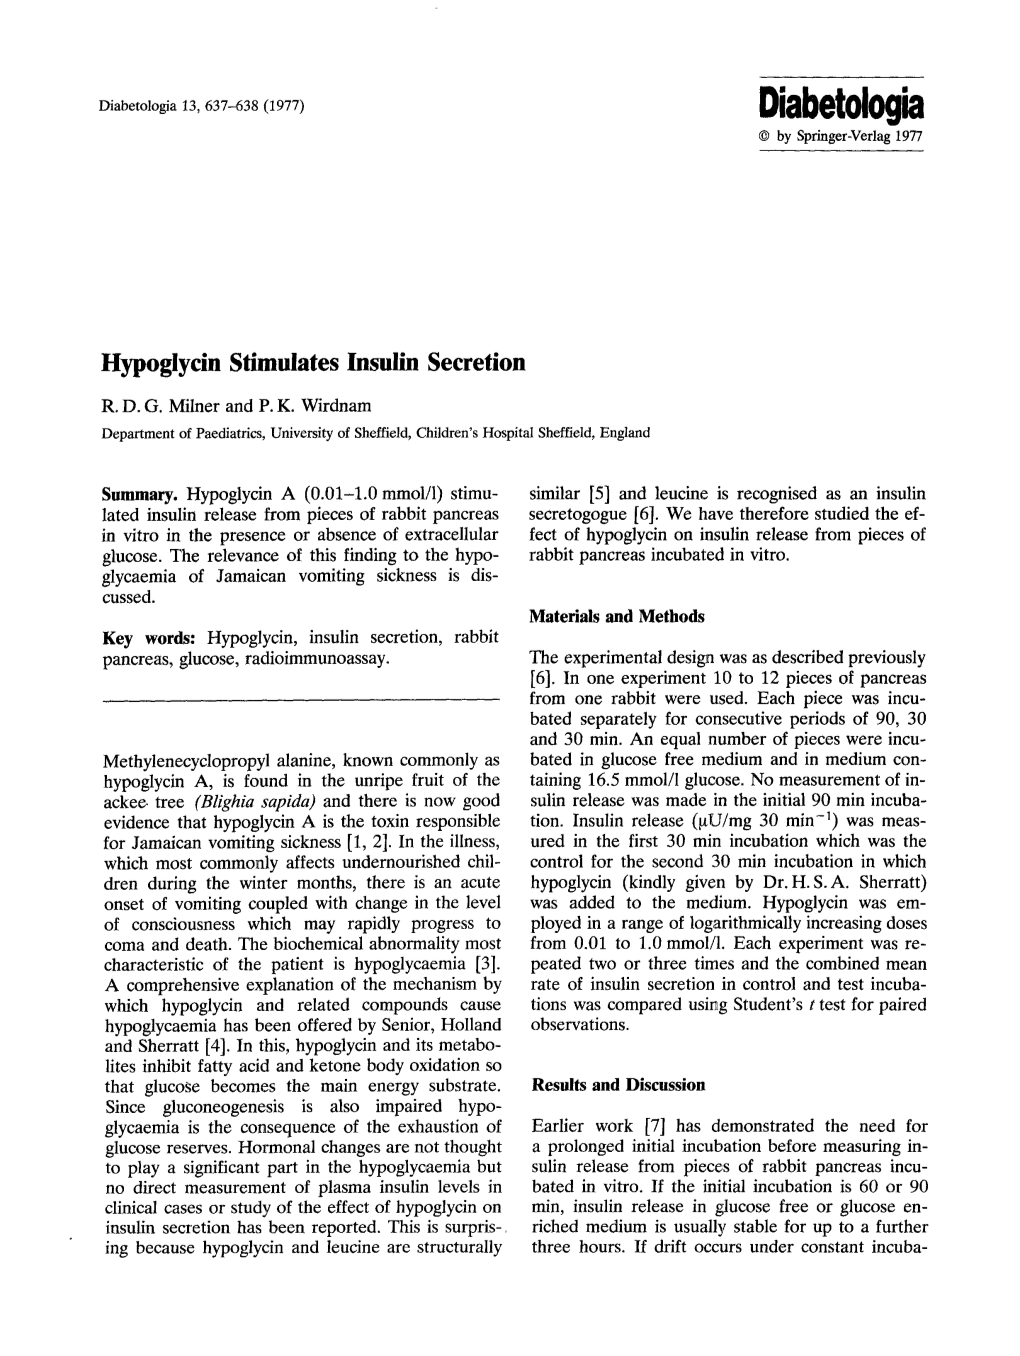 Hypoglycin Stimulates Insulin Secretion